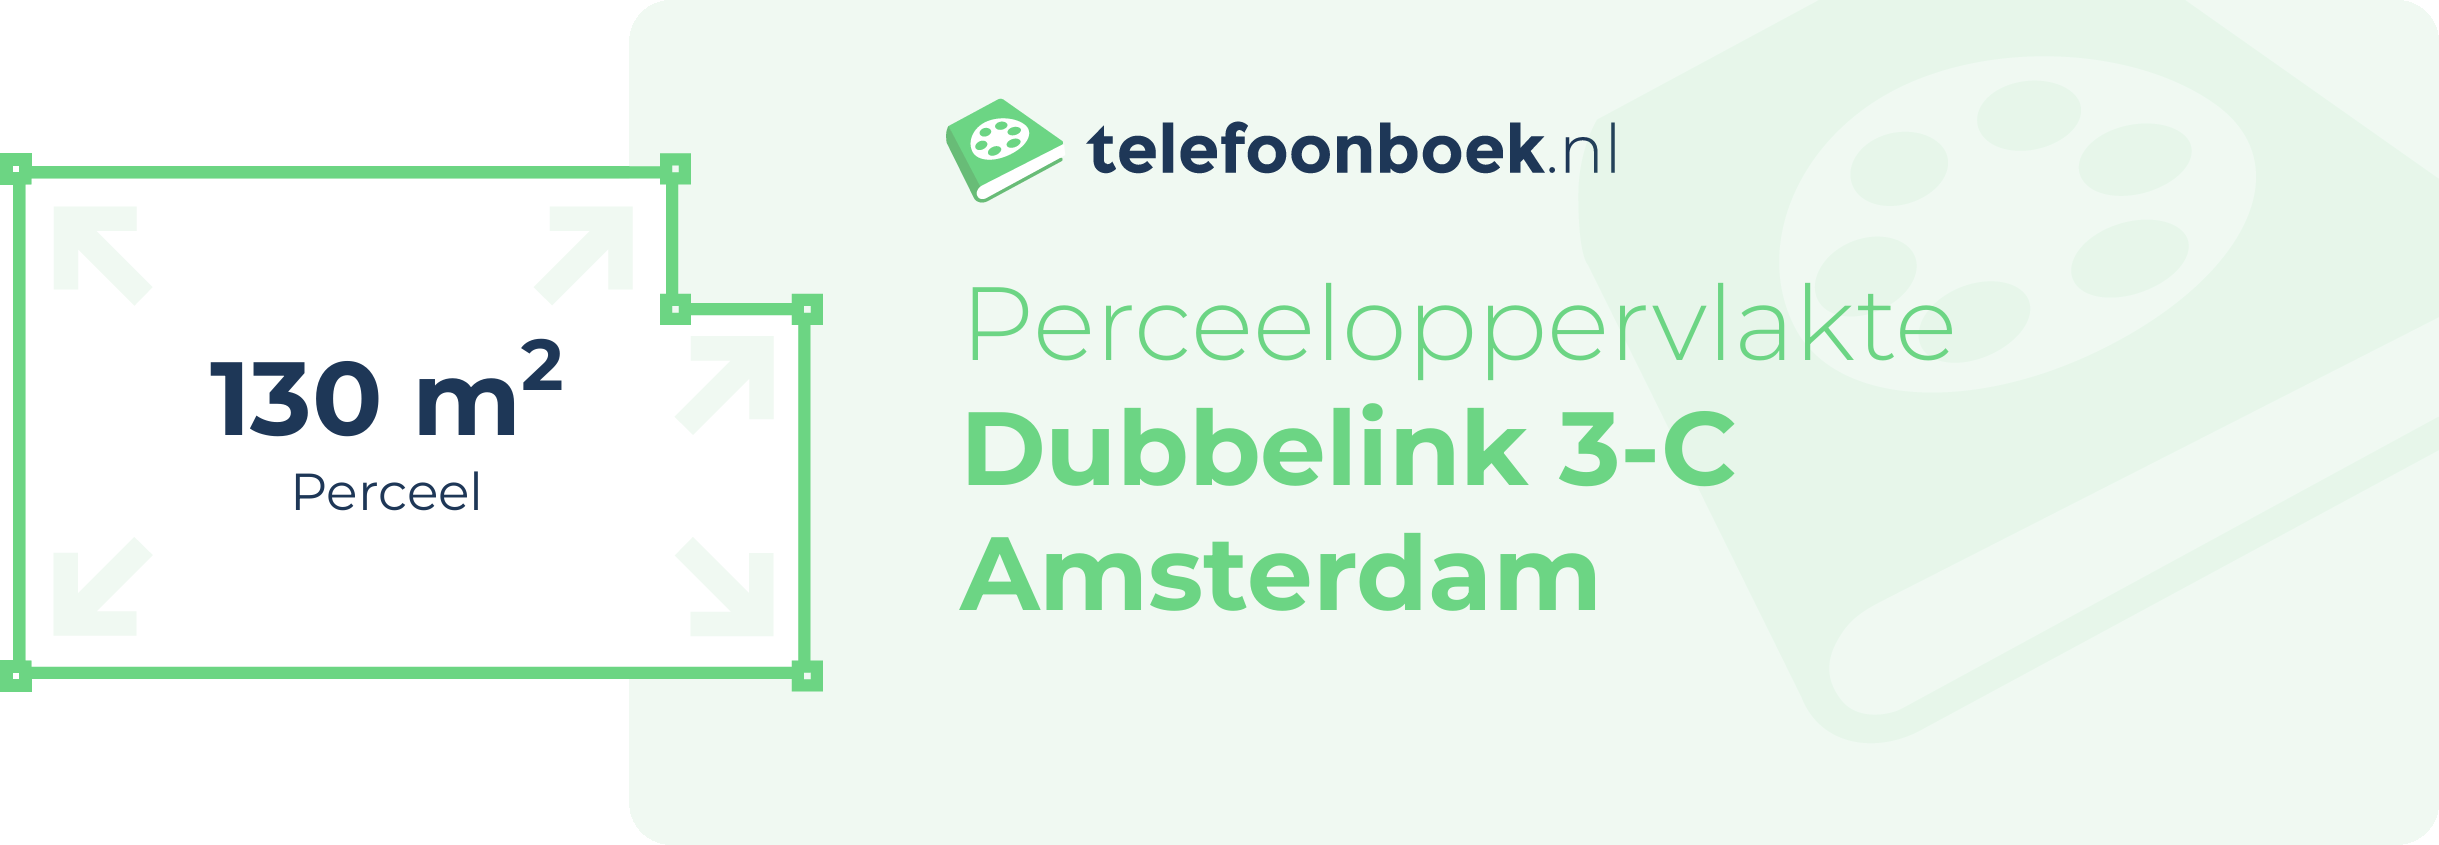 Perceeloppervlakte Dubbelink 3-C Amsterdam